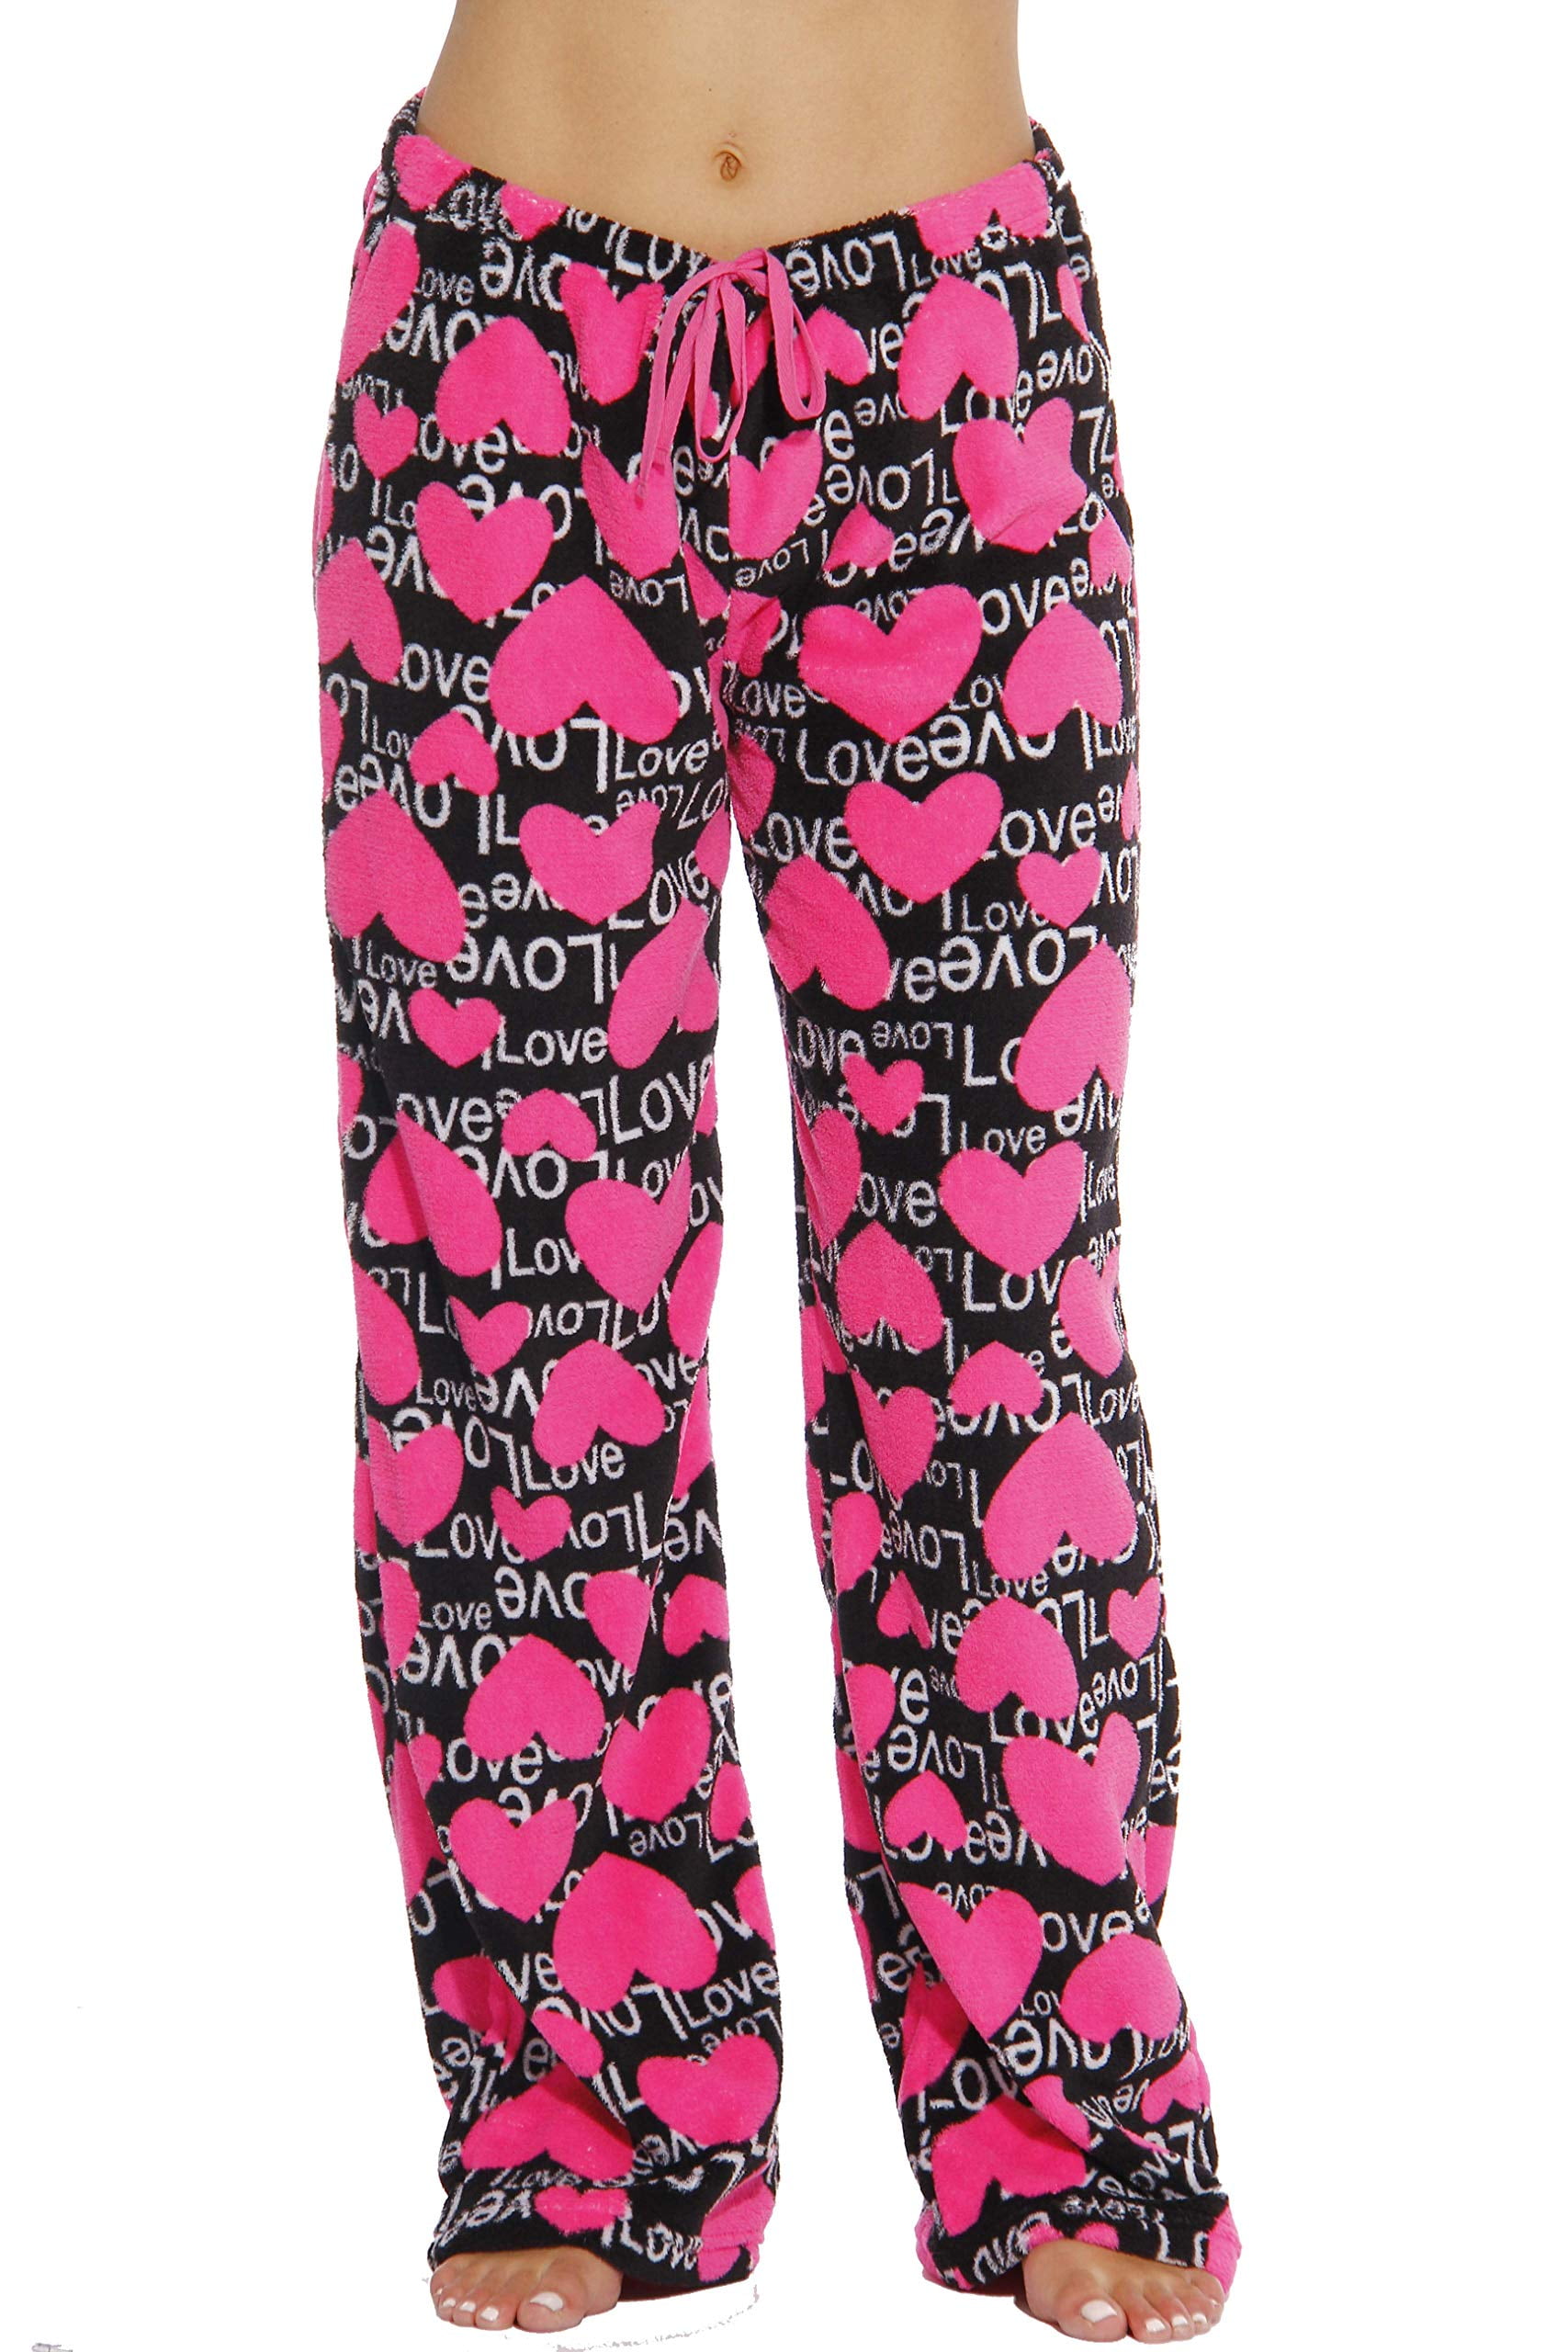 Just Love Plush Pajama Pants for Women - Petite to Plus Size Sleepwear ( Black - Leaf, 3X) 